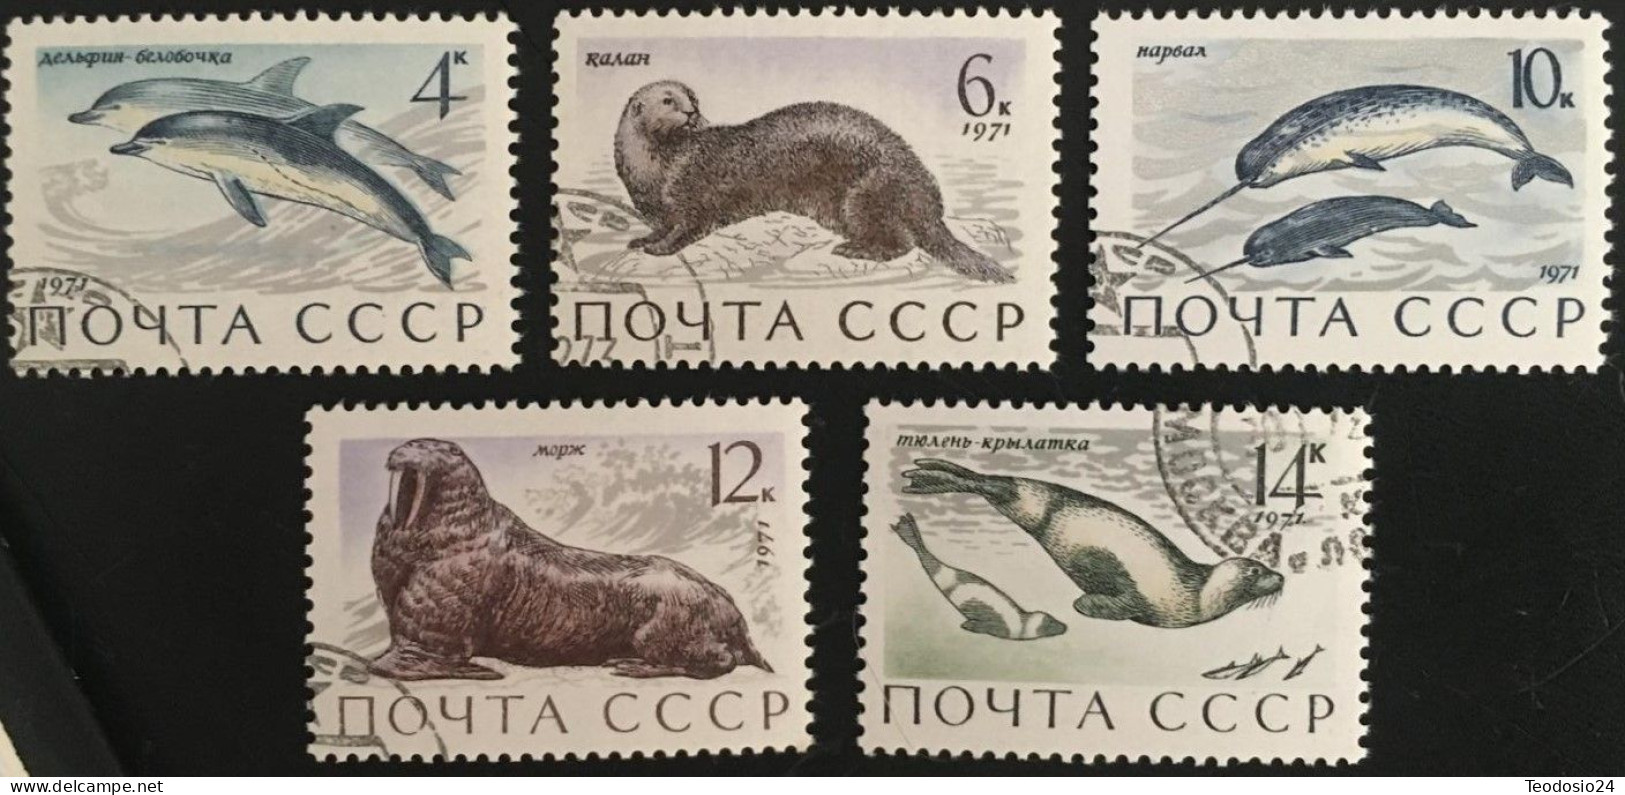 Rusia 1971 Yvert YVERT 3747-3751 FU USED - Used Stamps